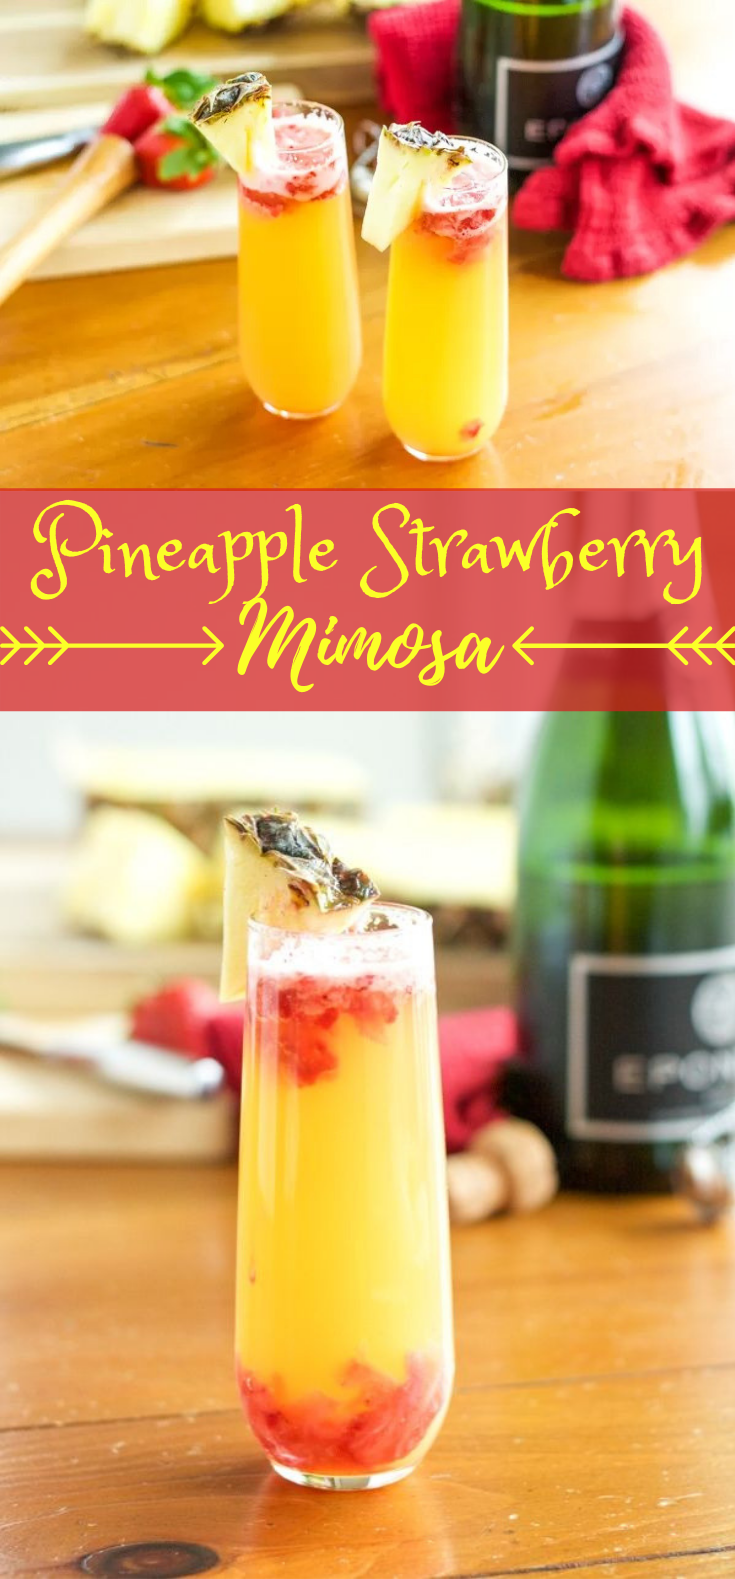 PINEAPPLE STRAWBERRY MIMOSAS #drinks #amazingrecipes